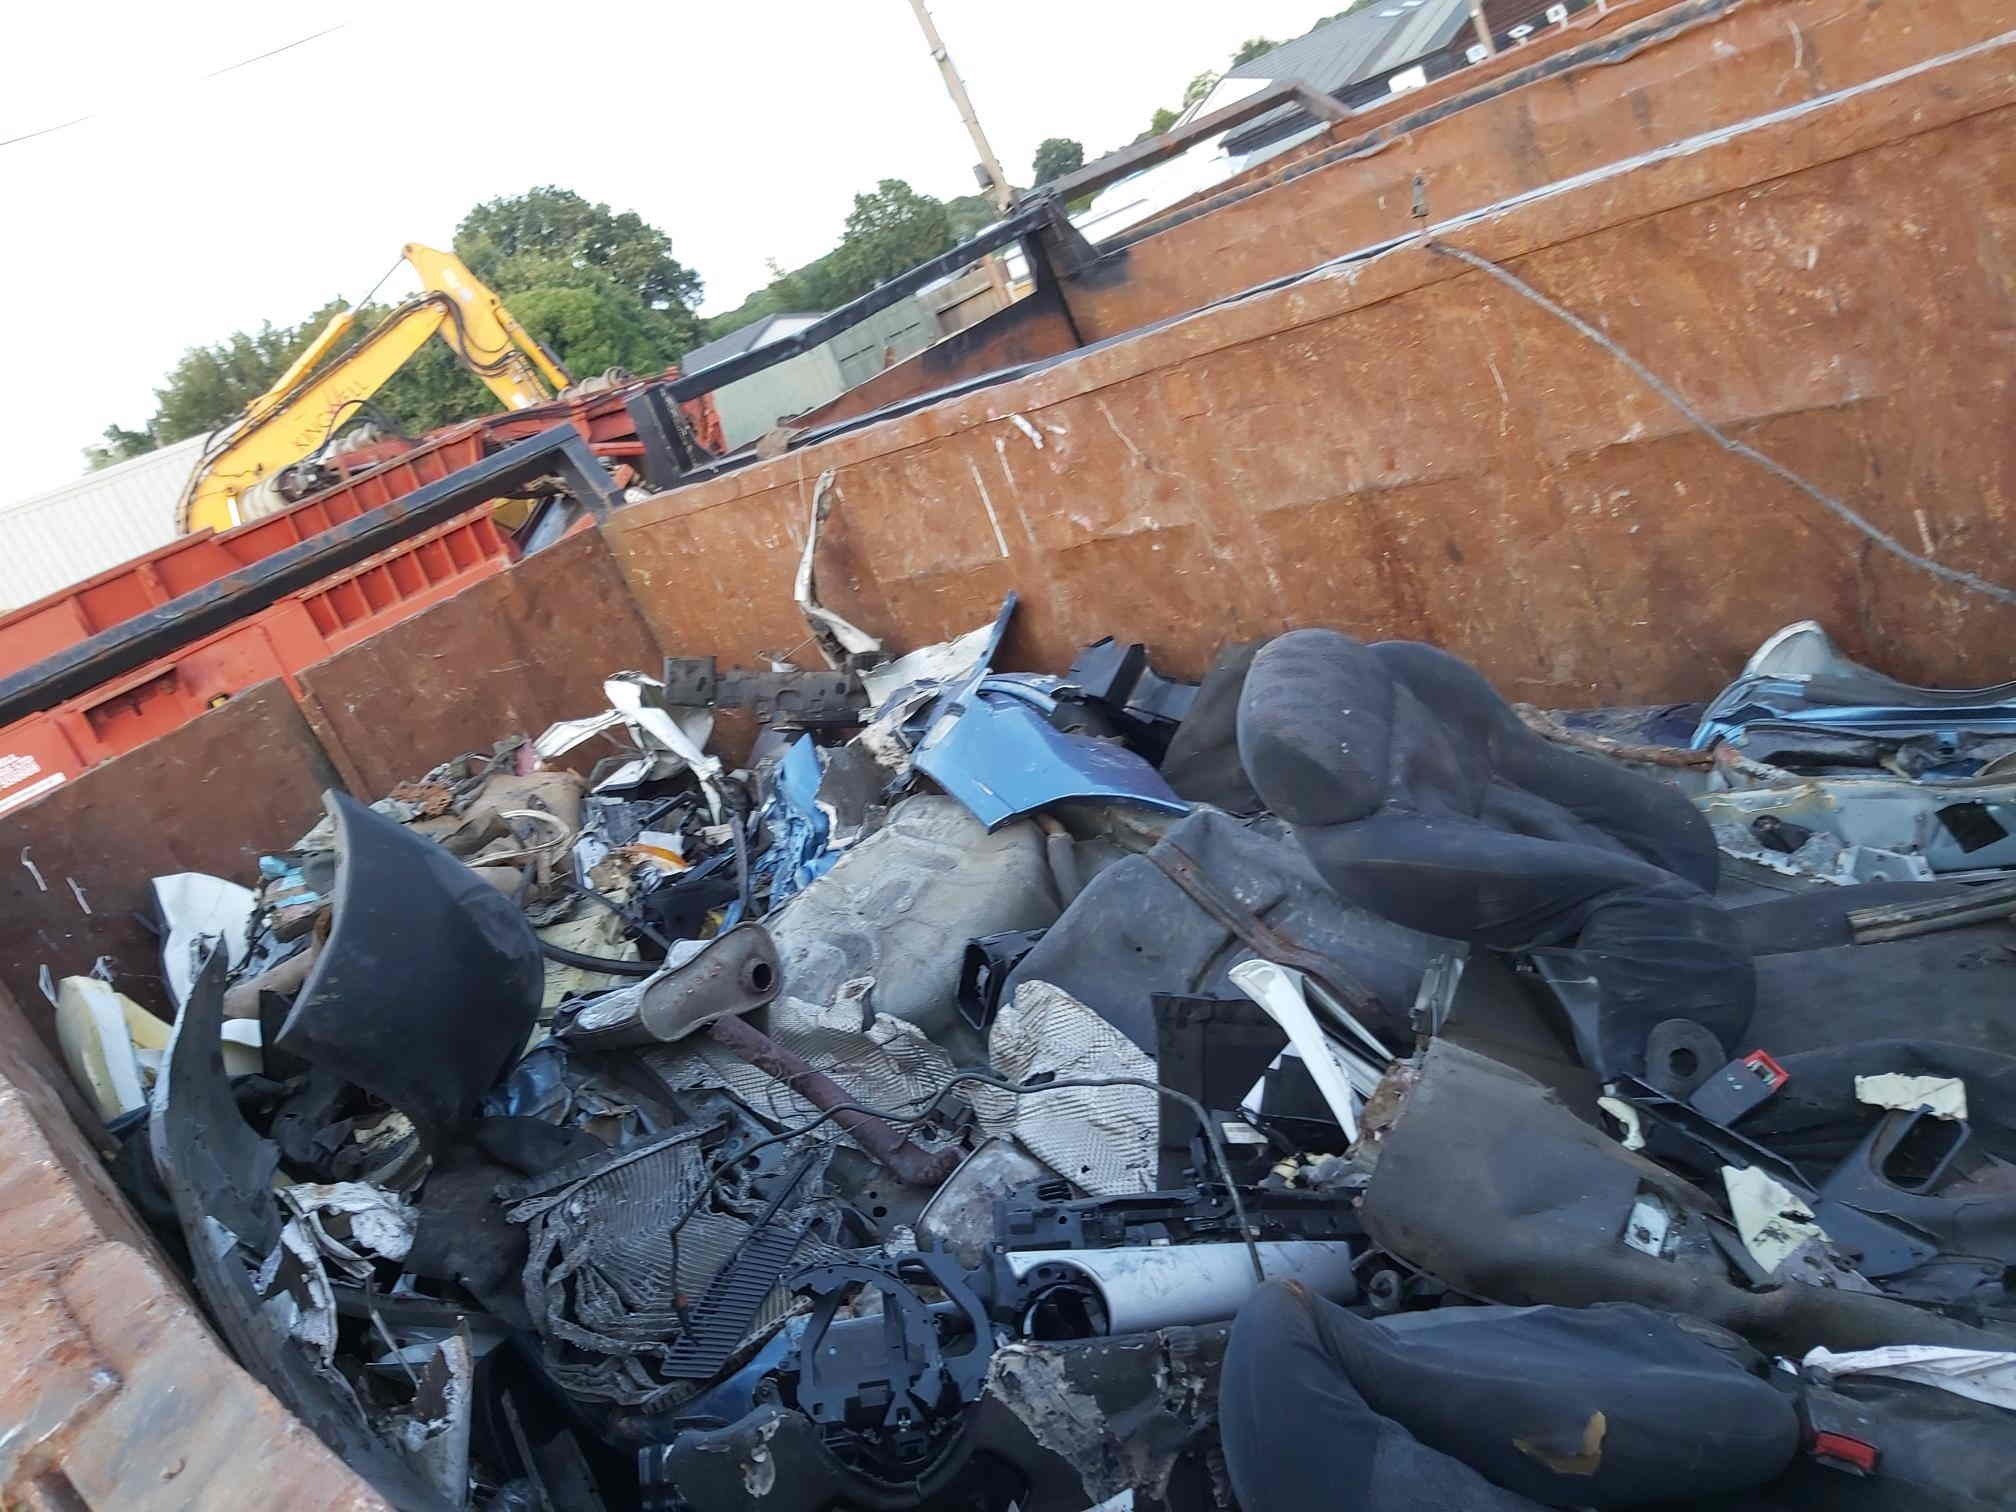 Bendells van was found at a scrapyard Credit: Essex Police